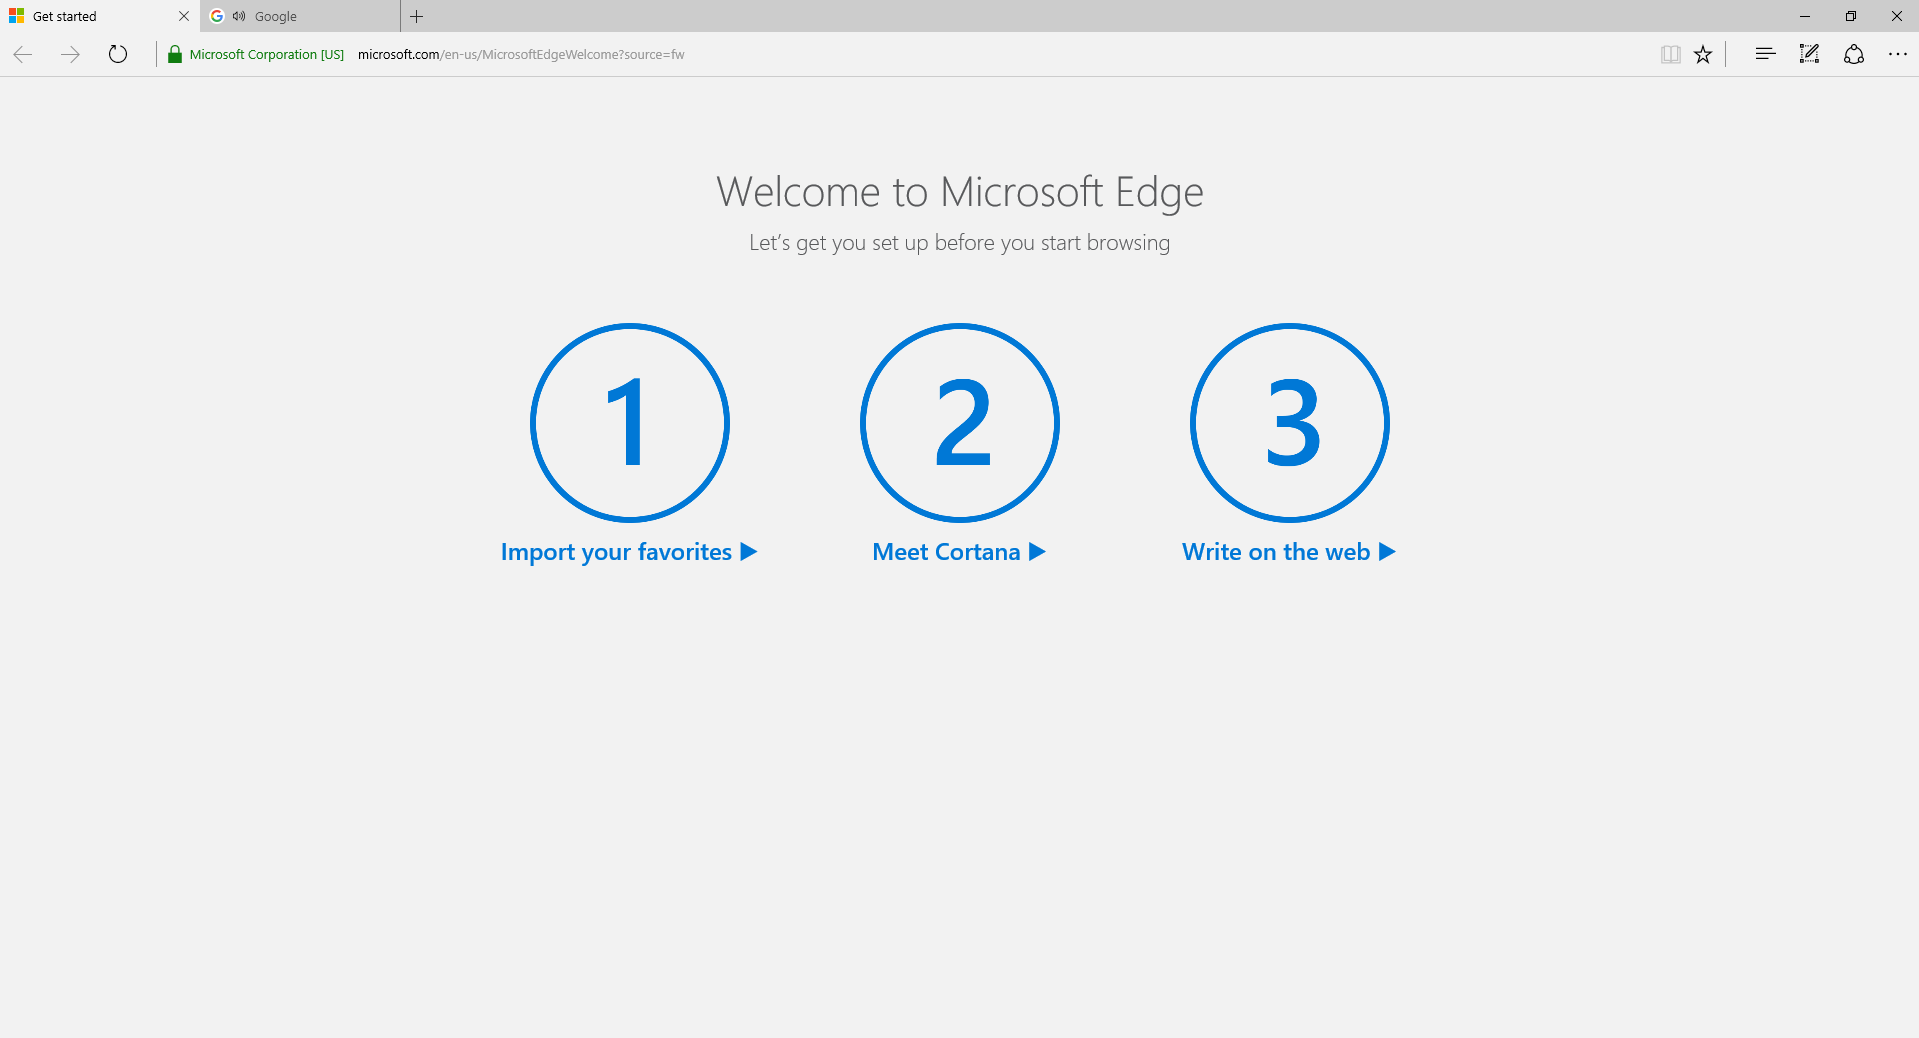 Microsoft edge blank screen - rotgoto